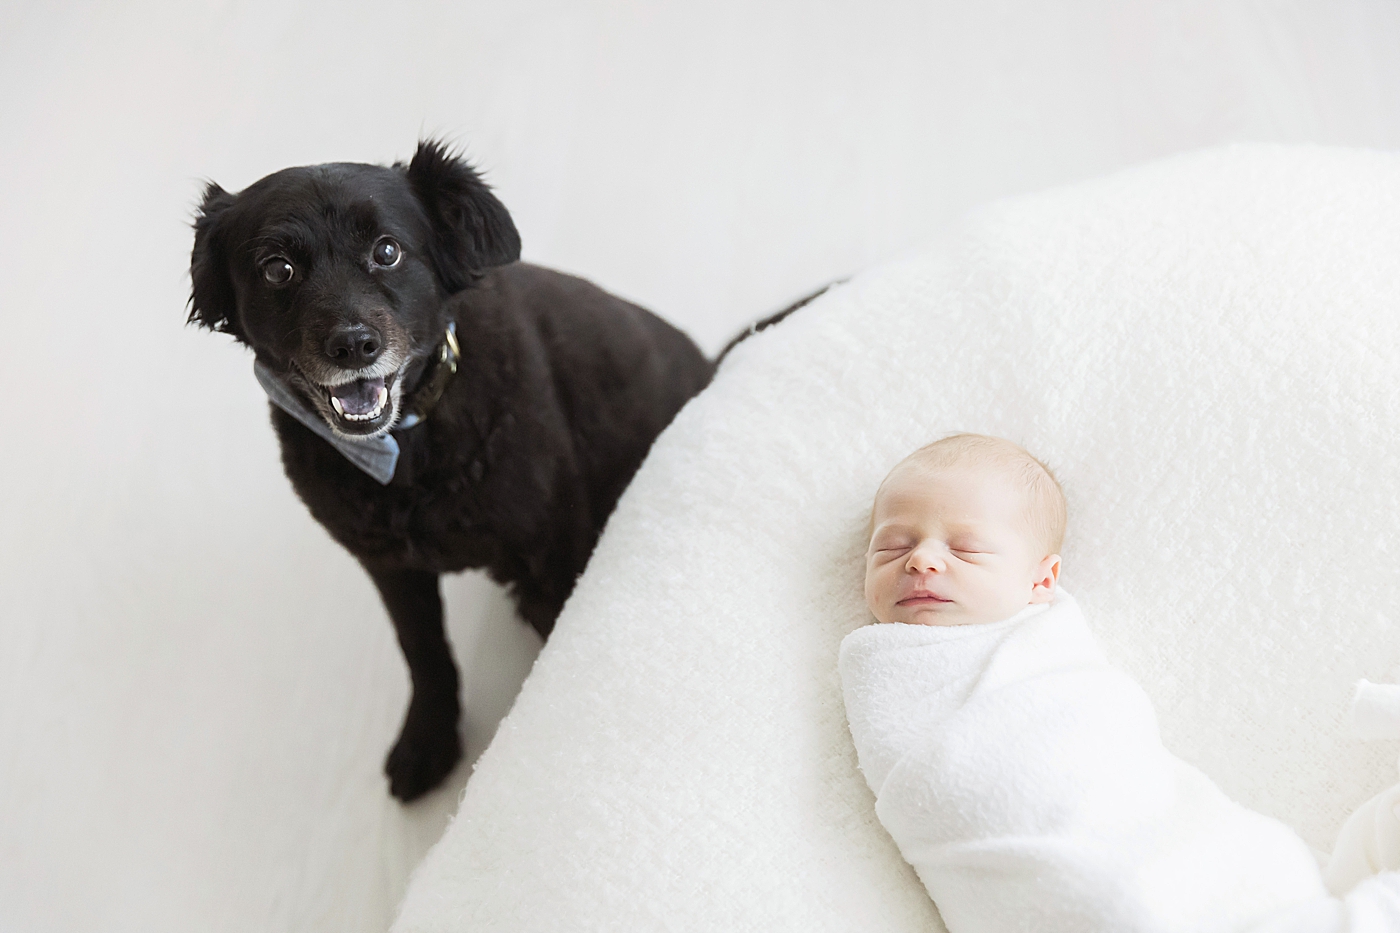 Newborn photoshoot with family dog in Houston studio. Photo by Fresh Light Photography.